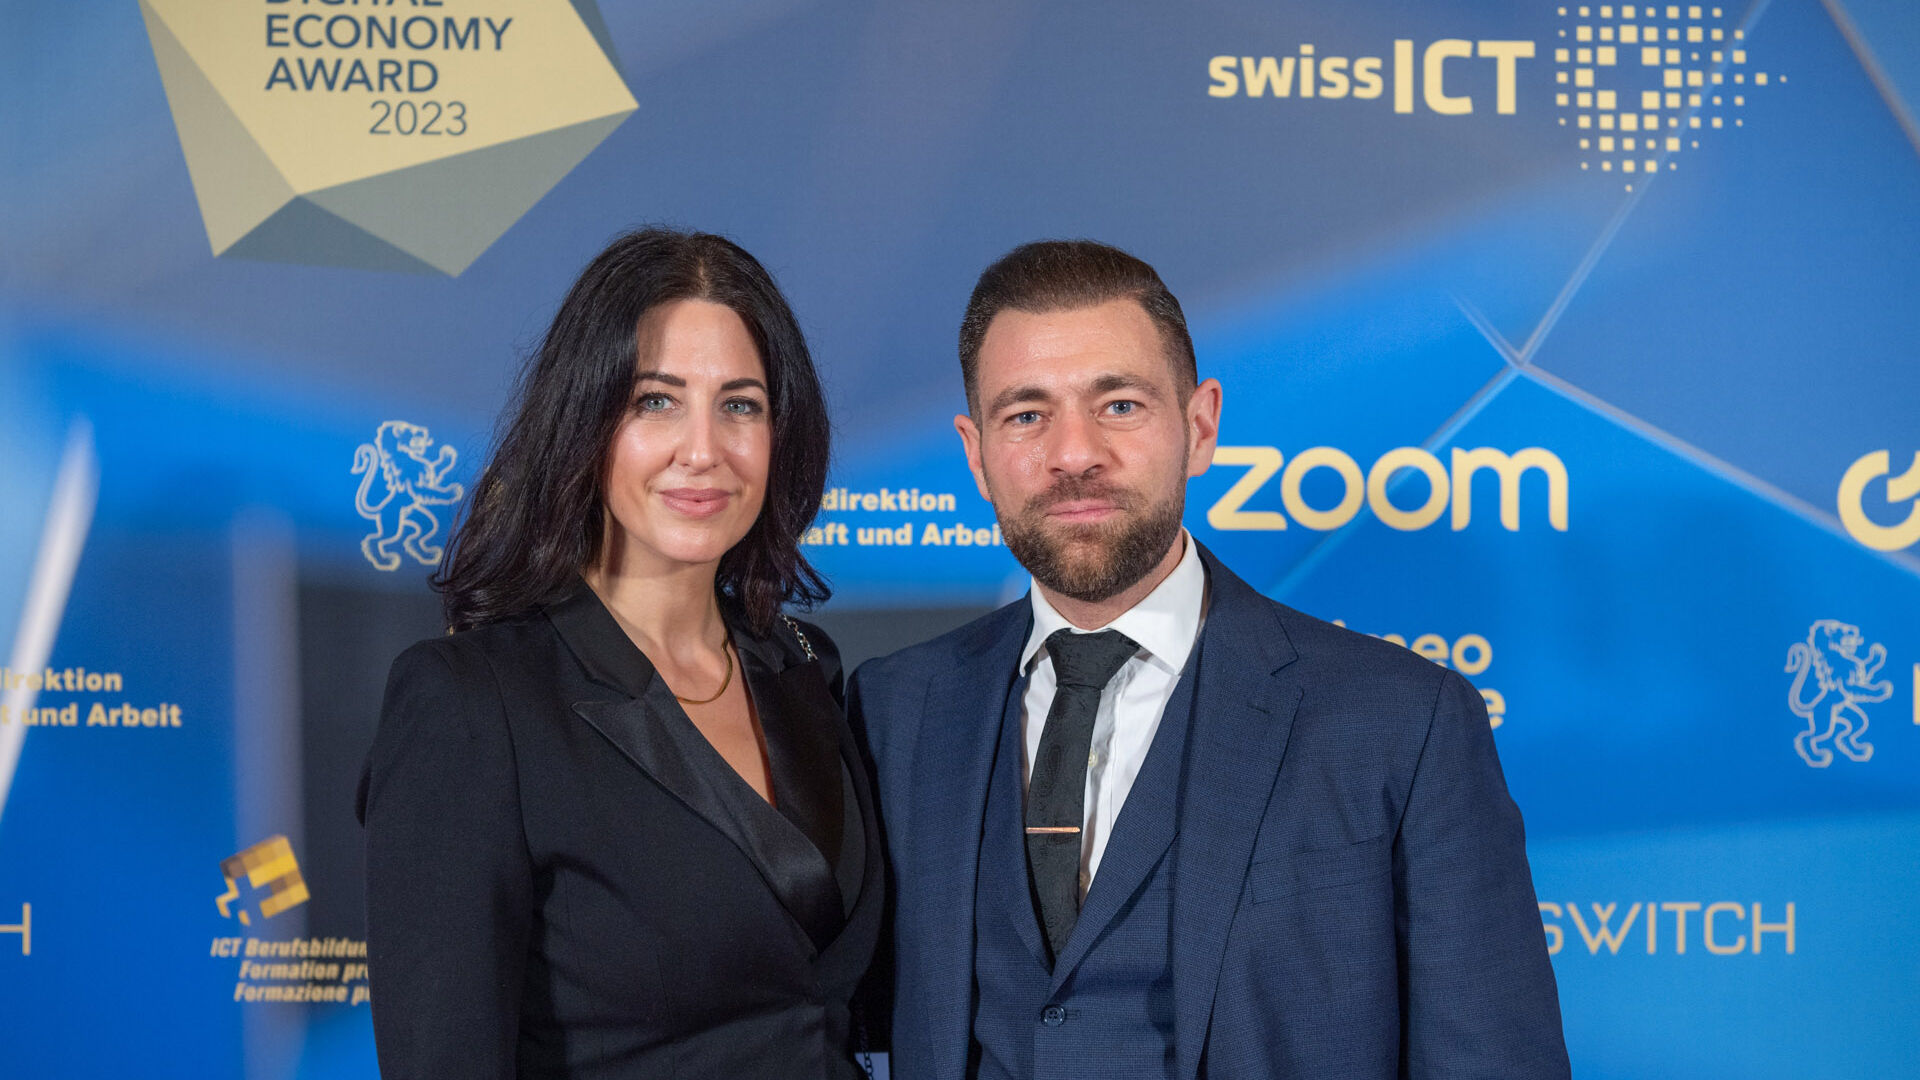 Digital Economy Award: fotogalleriet fra prisuddelingen på Hallenstadion i Zürich i Schweiz den 16. november 2023